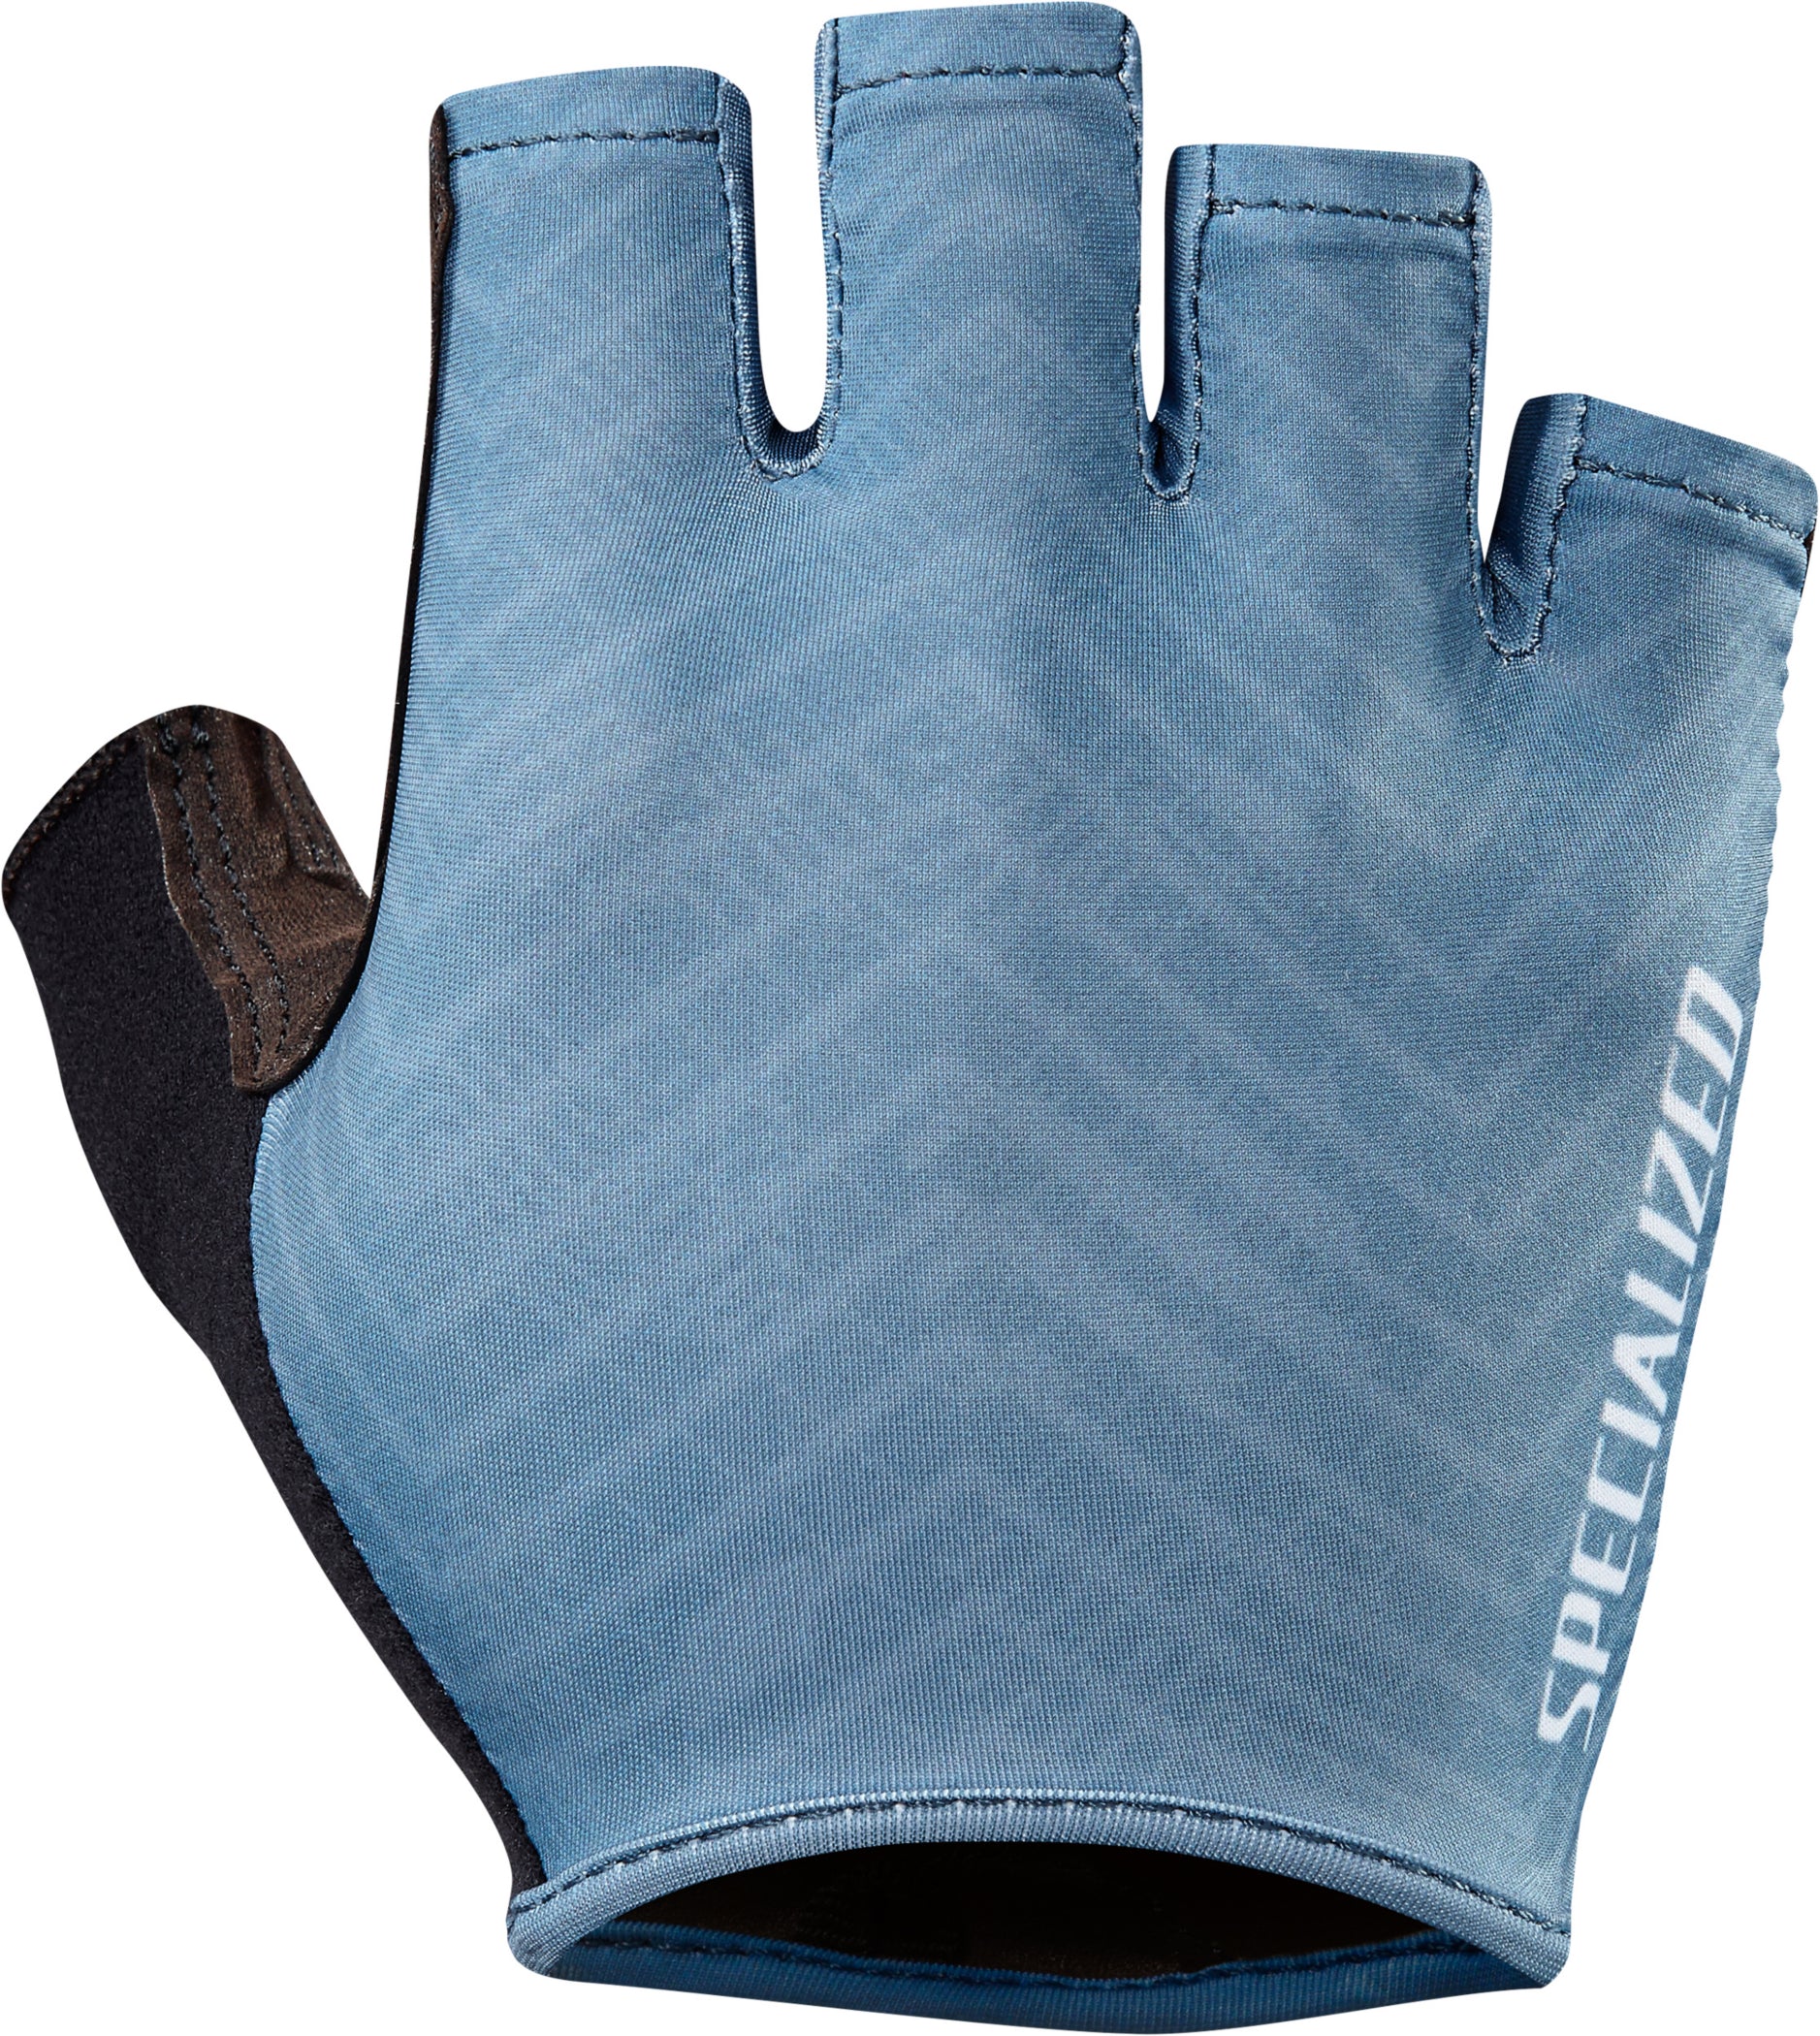 Men's SL Pro Gloves